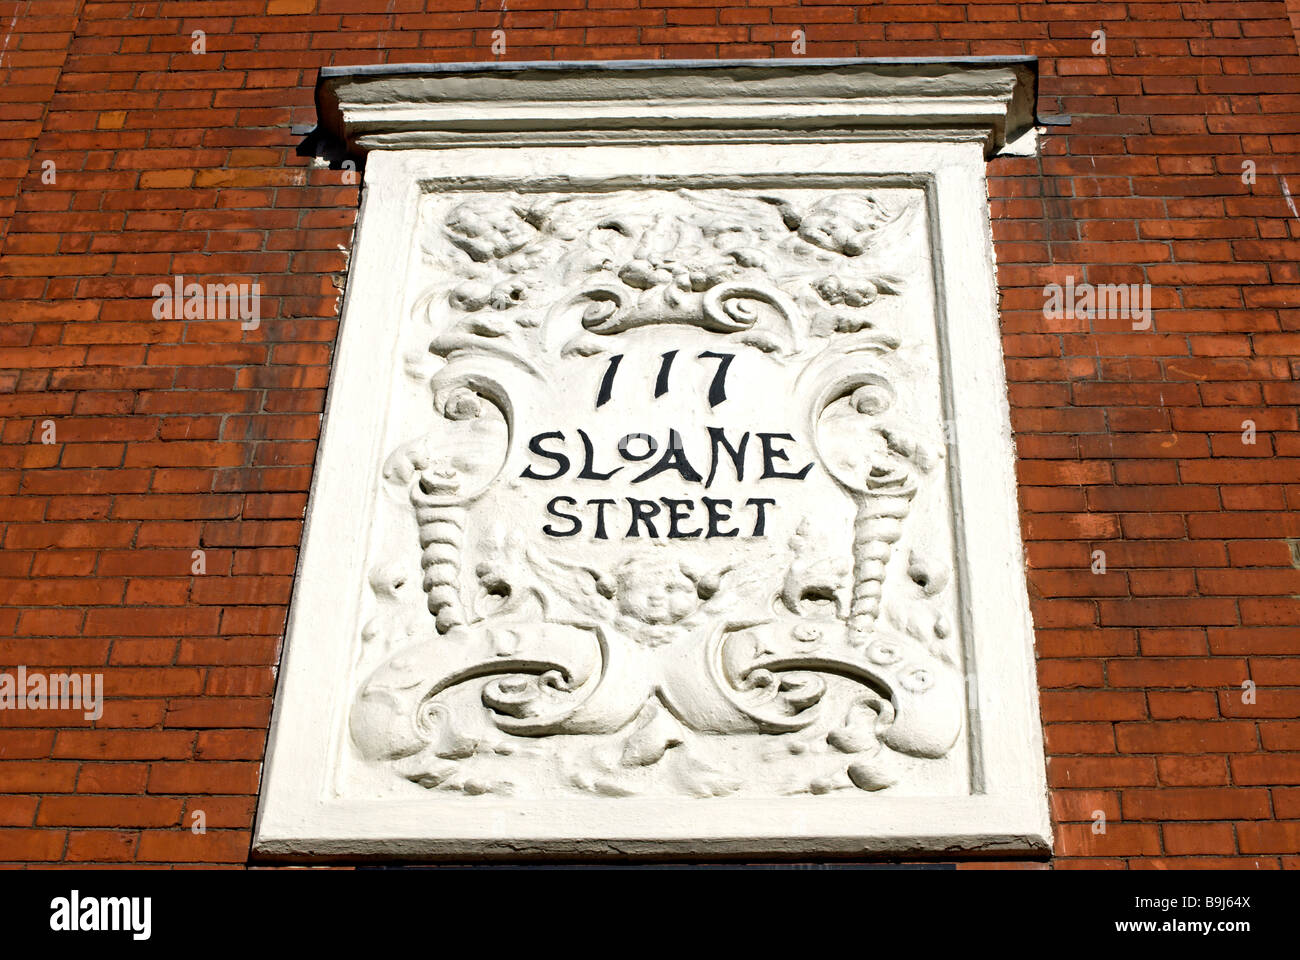 decoration on building marking 117 sloane street, chelsea, london, england Stock Photo